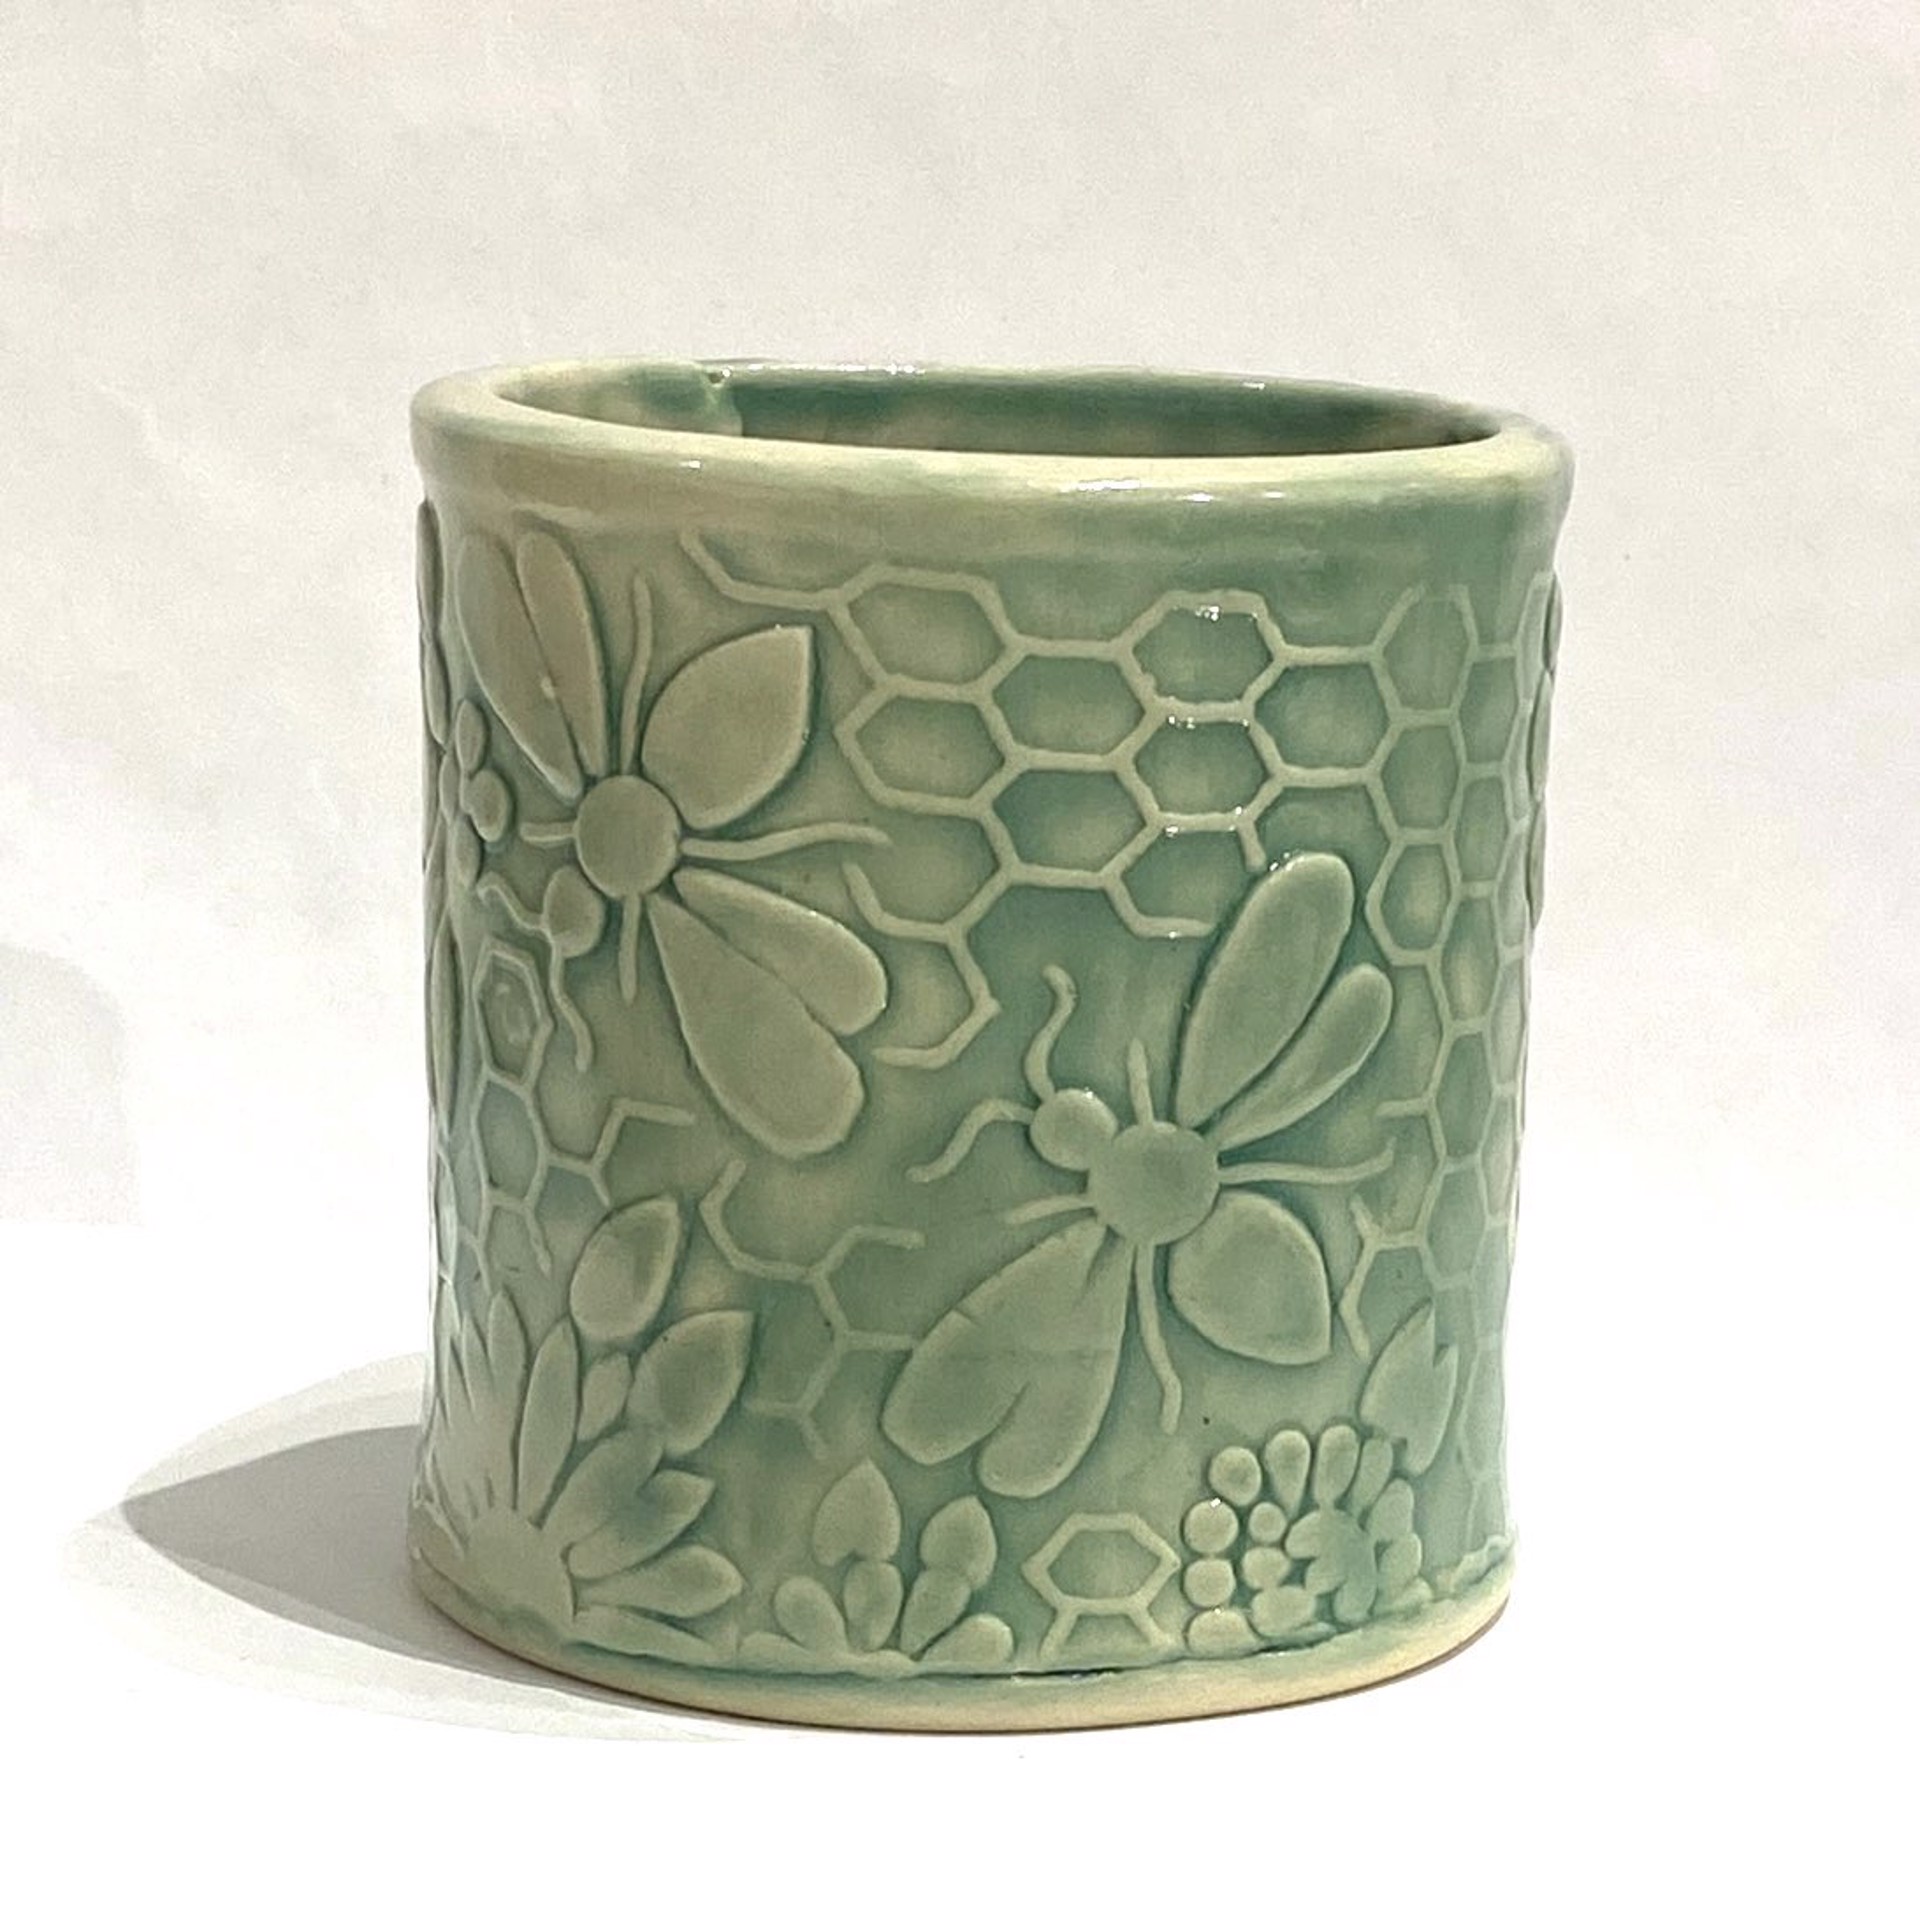 Tall Green Embossed Beehive Cup by Barbara Bergwerf, Ceramics